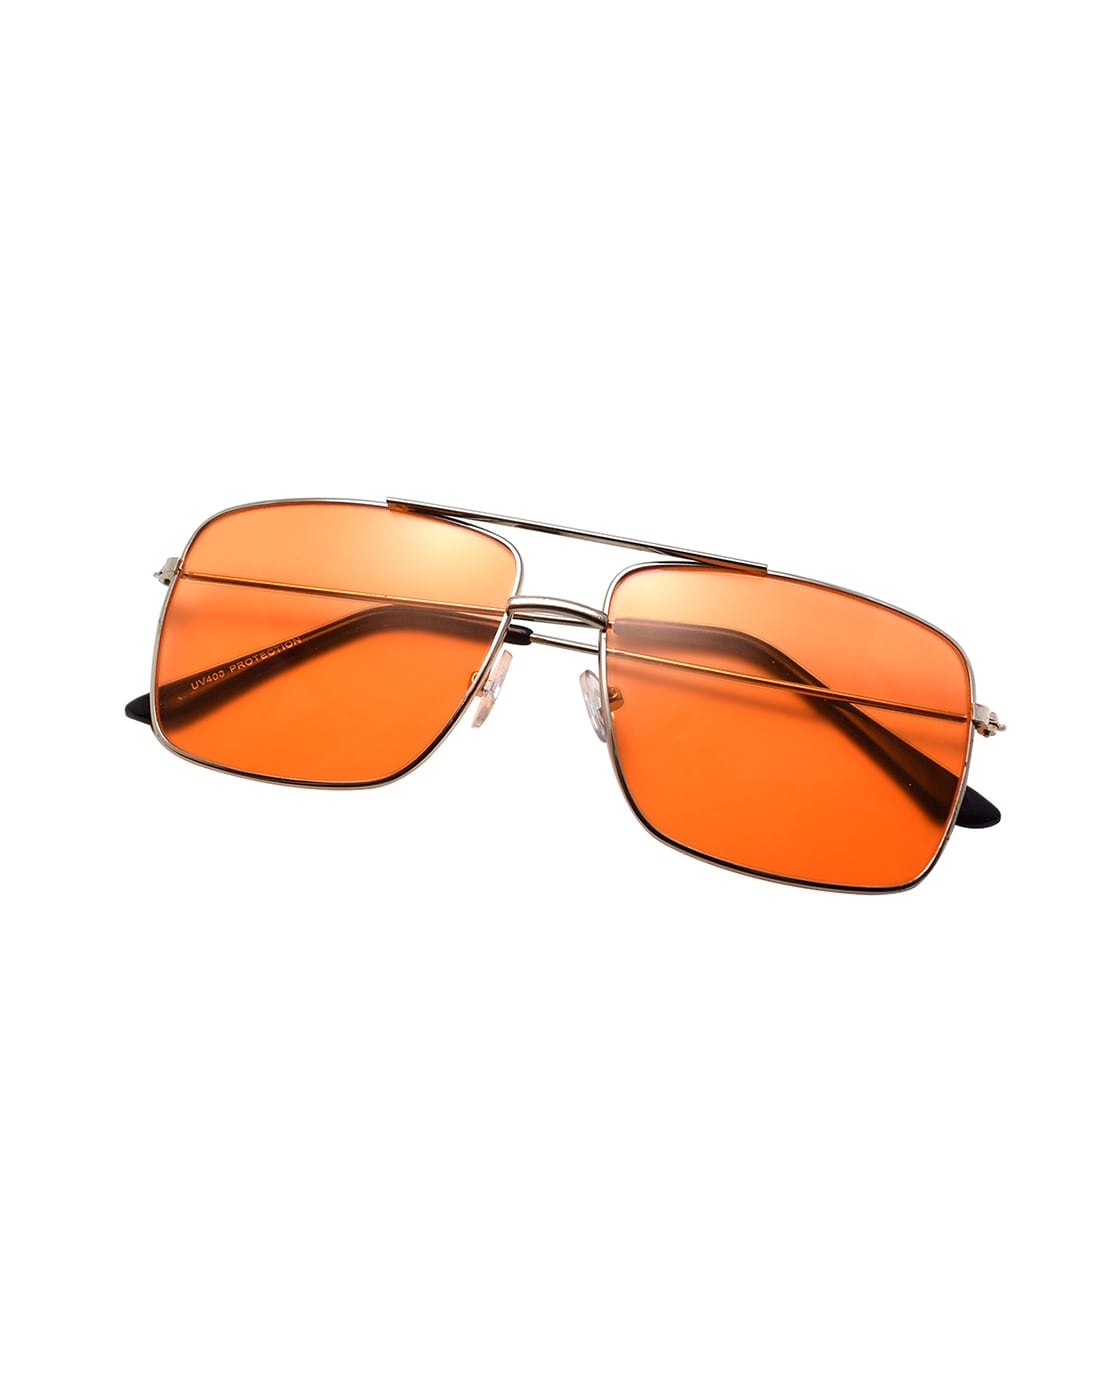 Noa - Rectangle Orange Sunglasses For Women